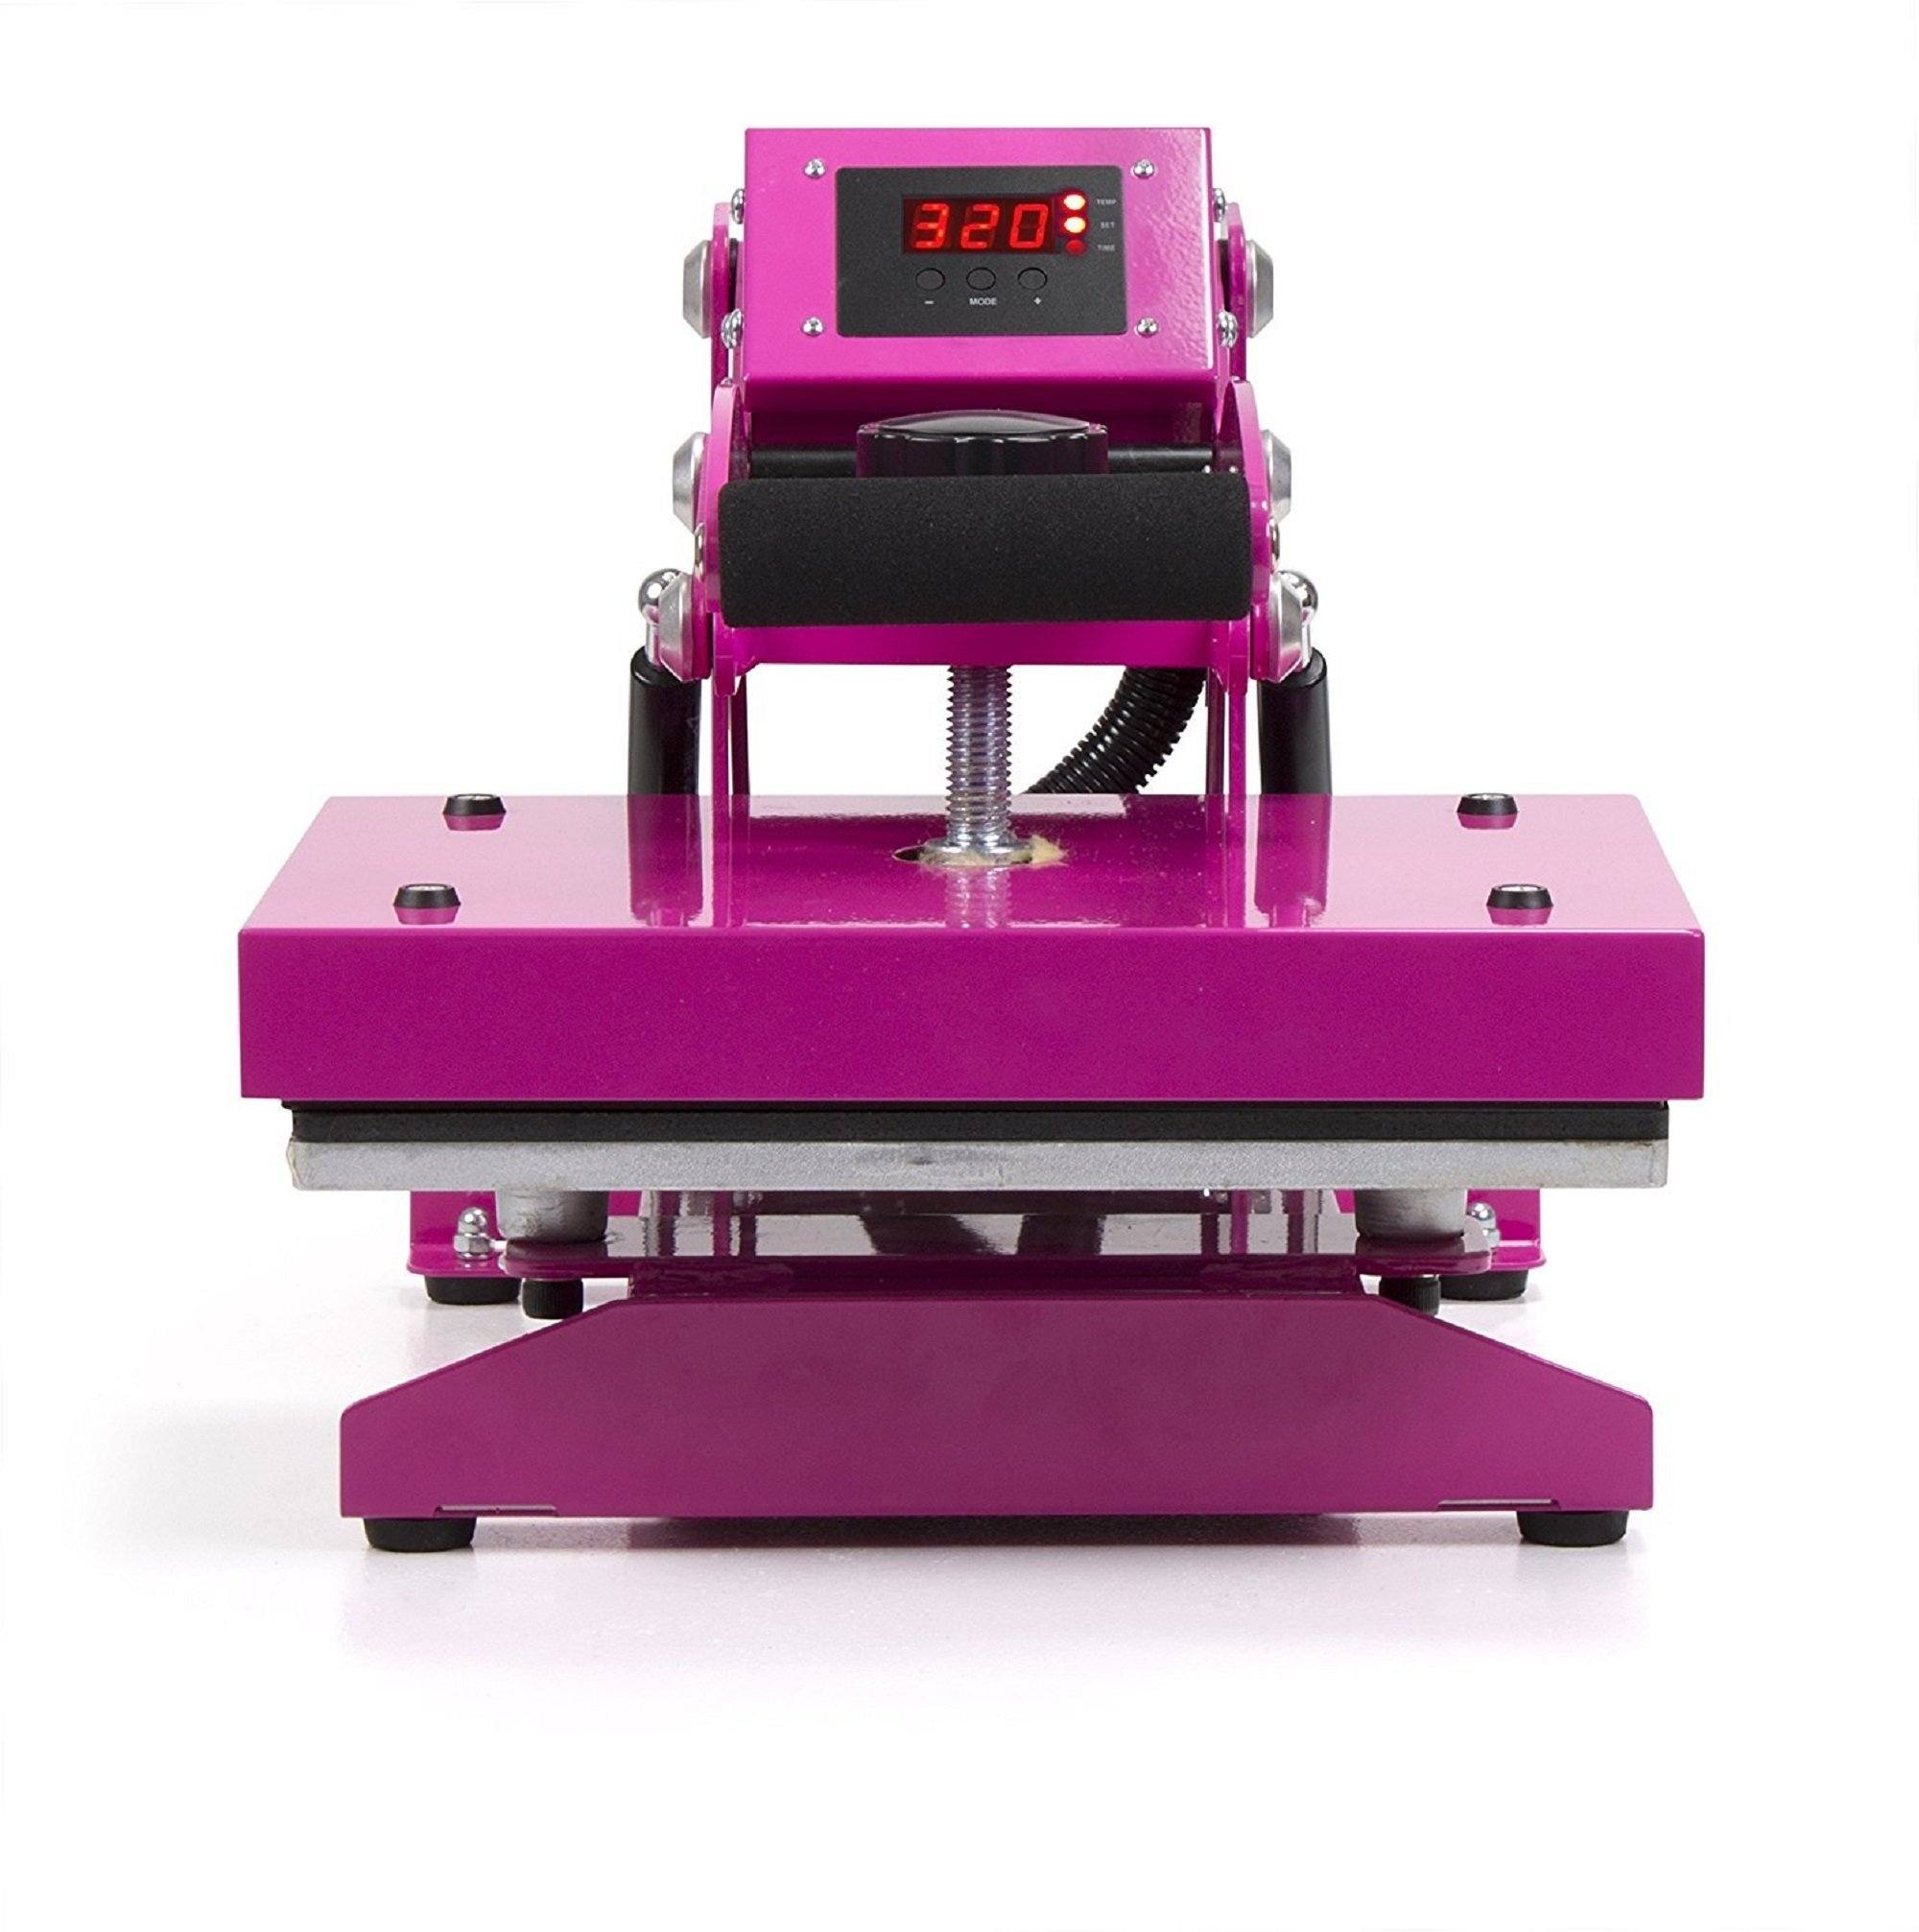  RiCOMA MultiFunction 4 in 1 Heat Press Machine : Arts, Crafts &  Sewing